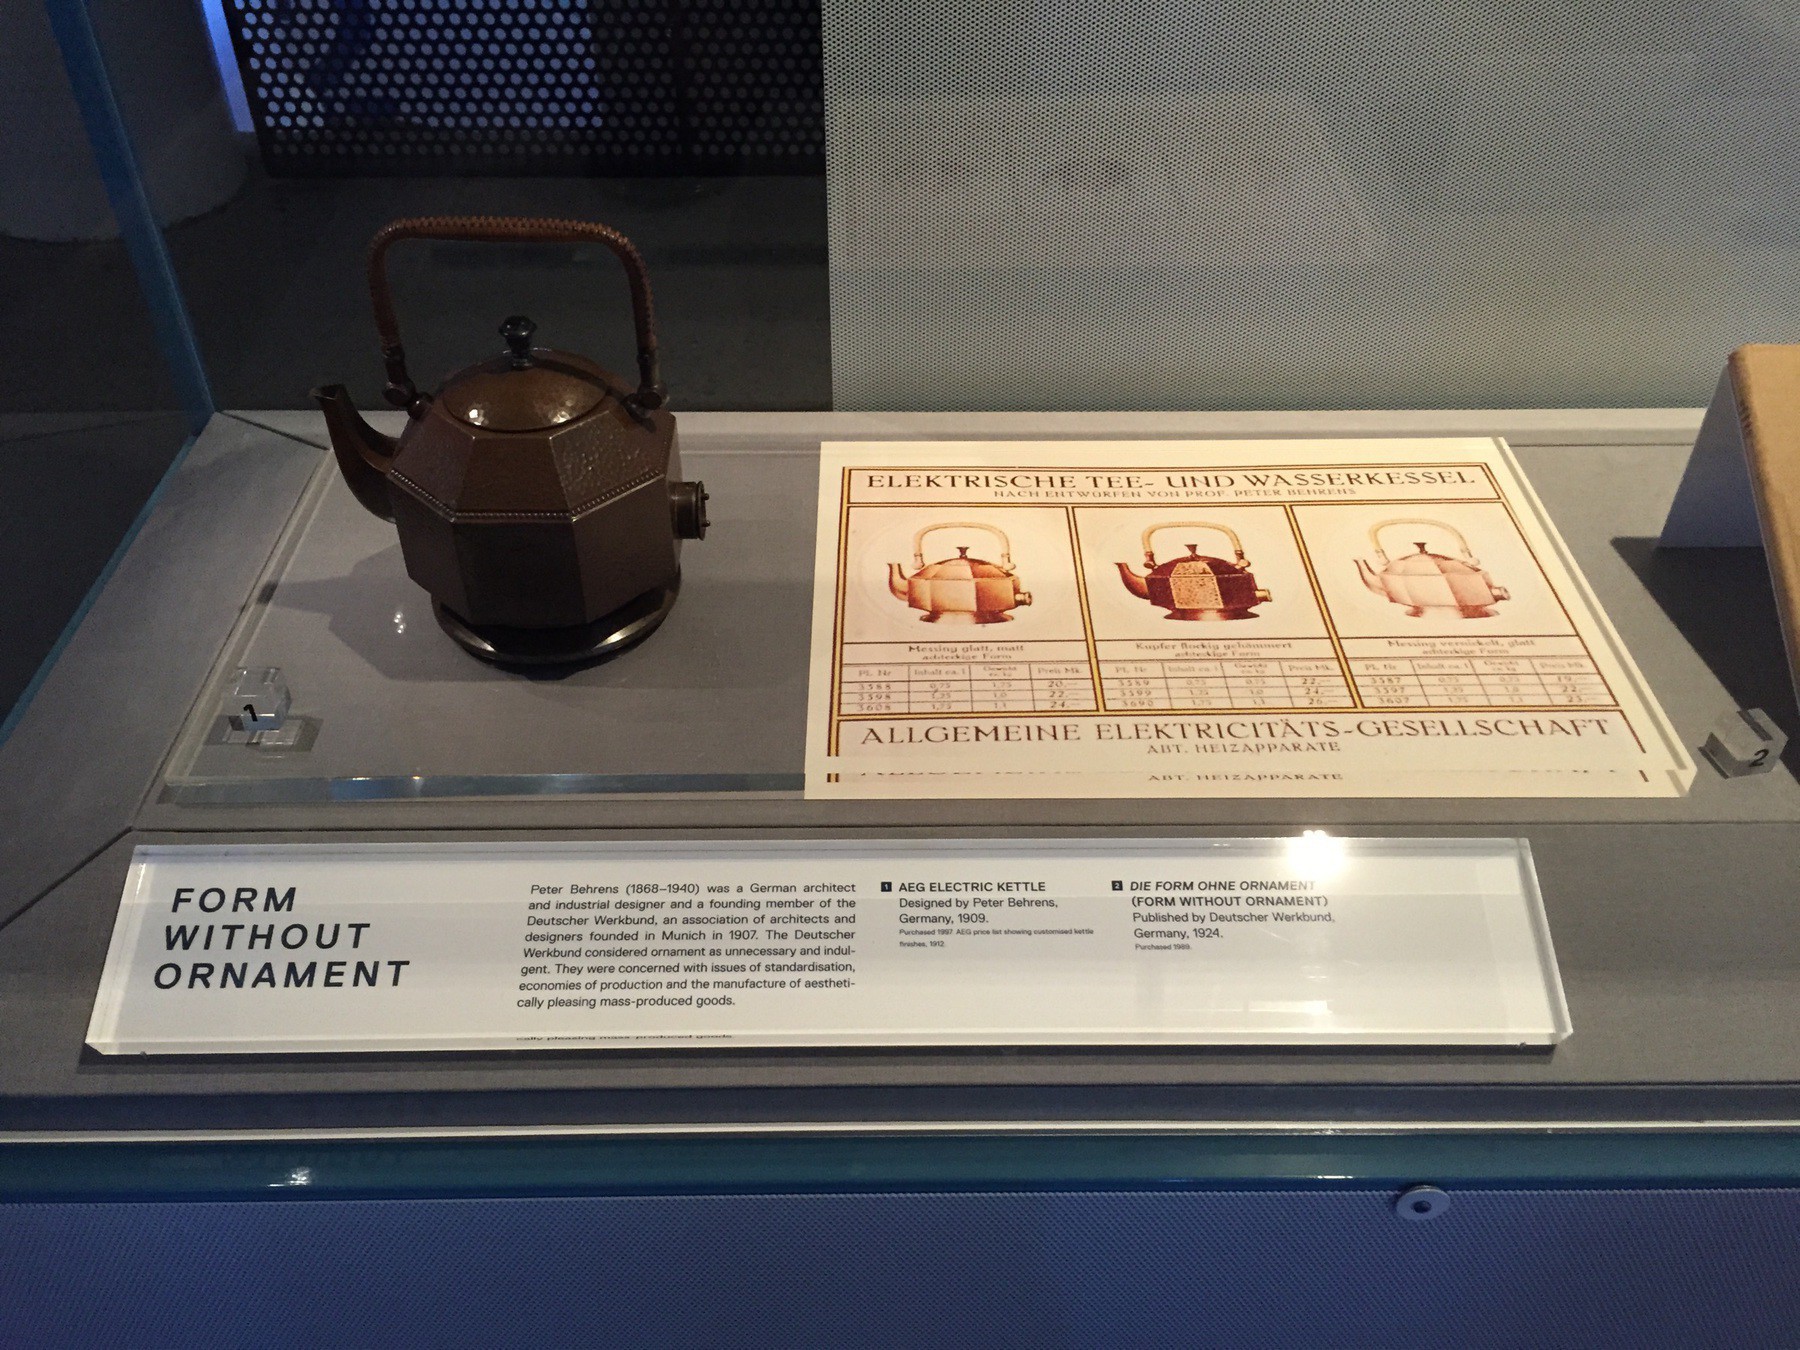 Early German electric water kettle